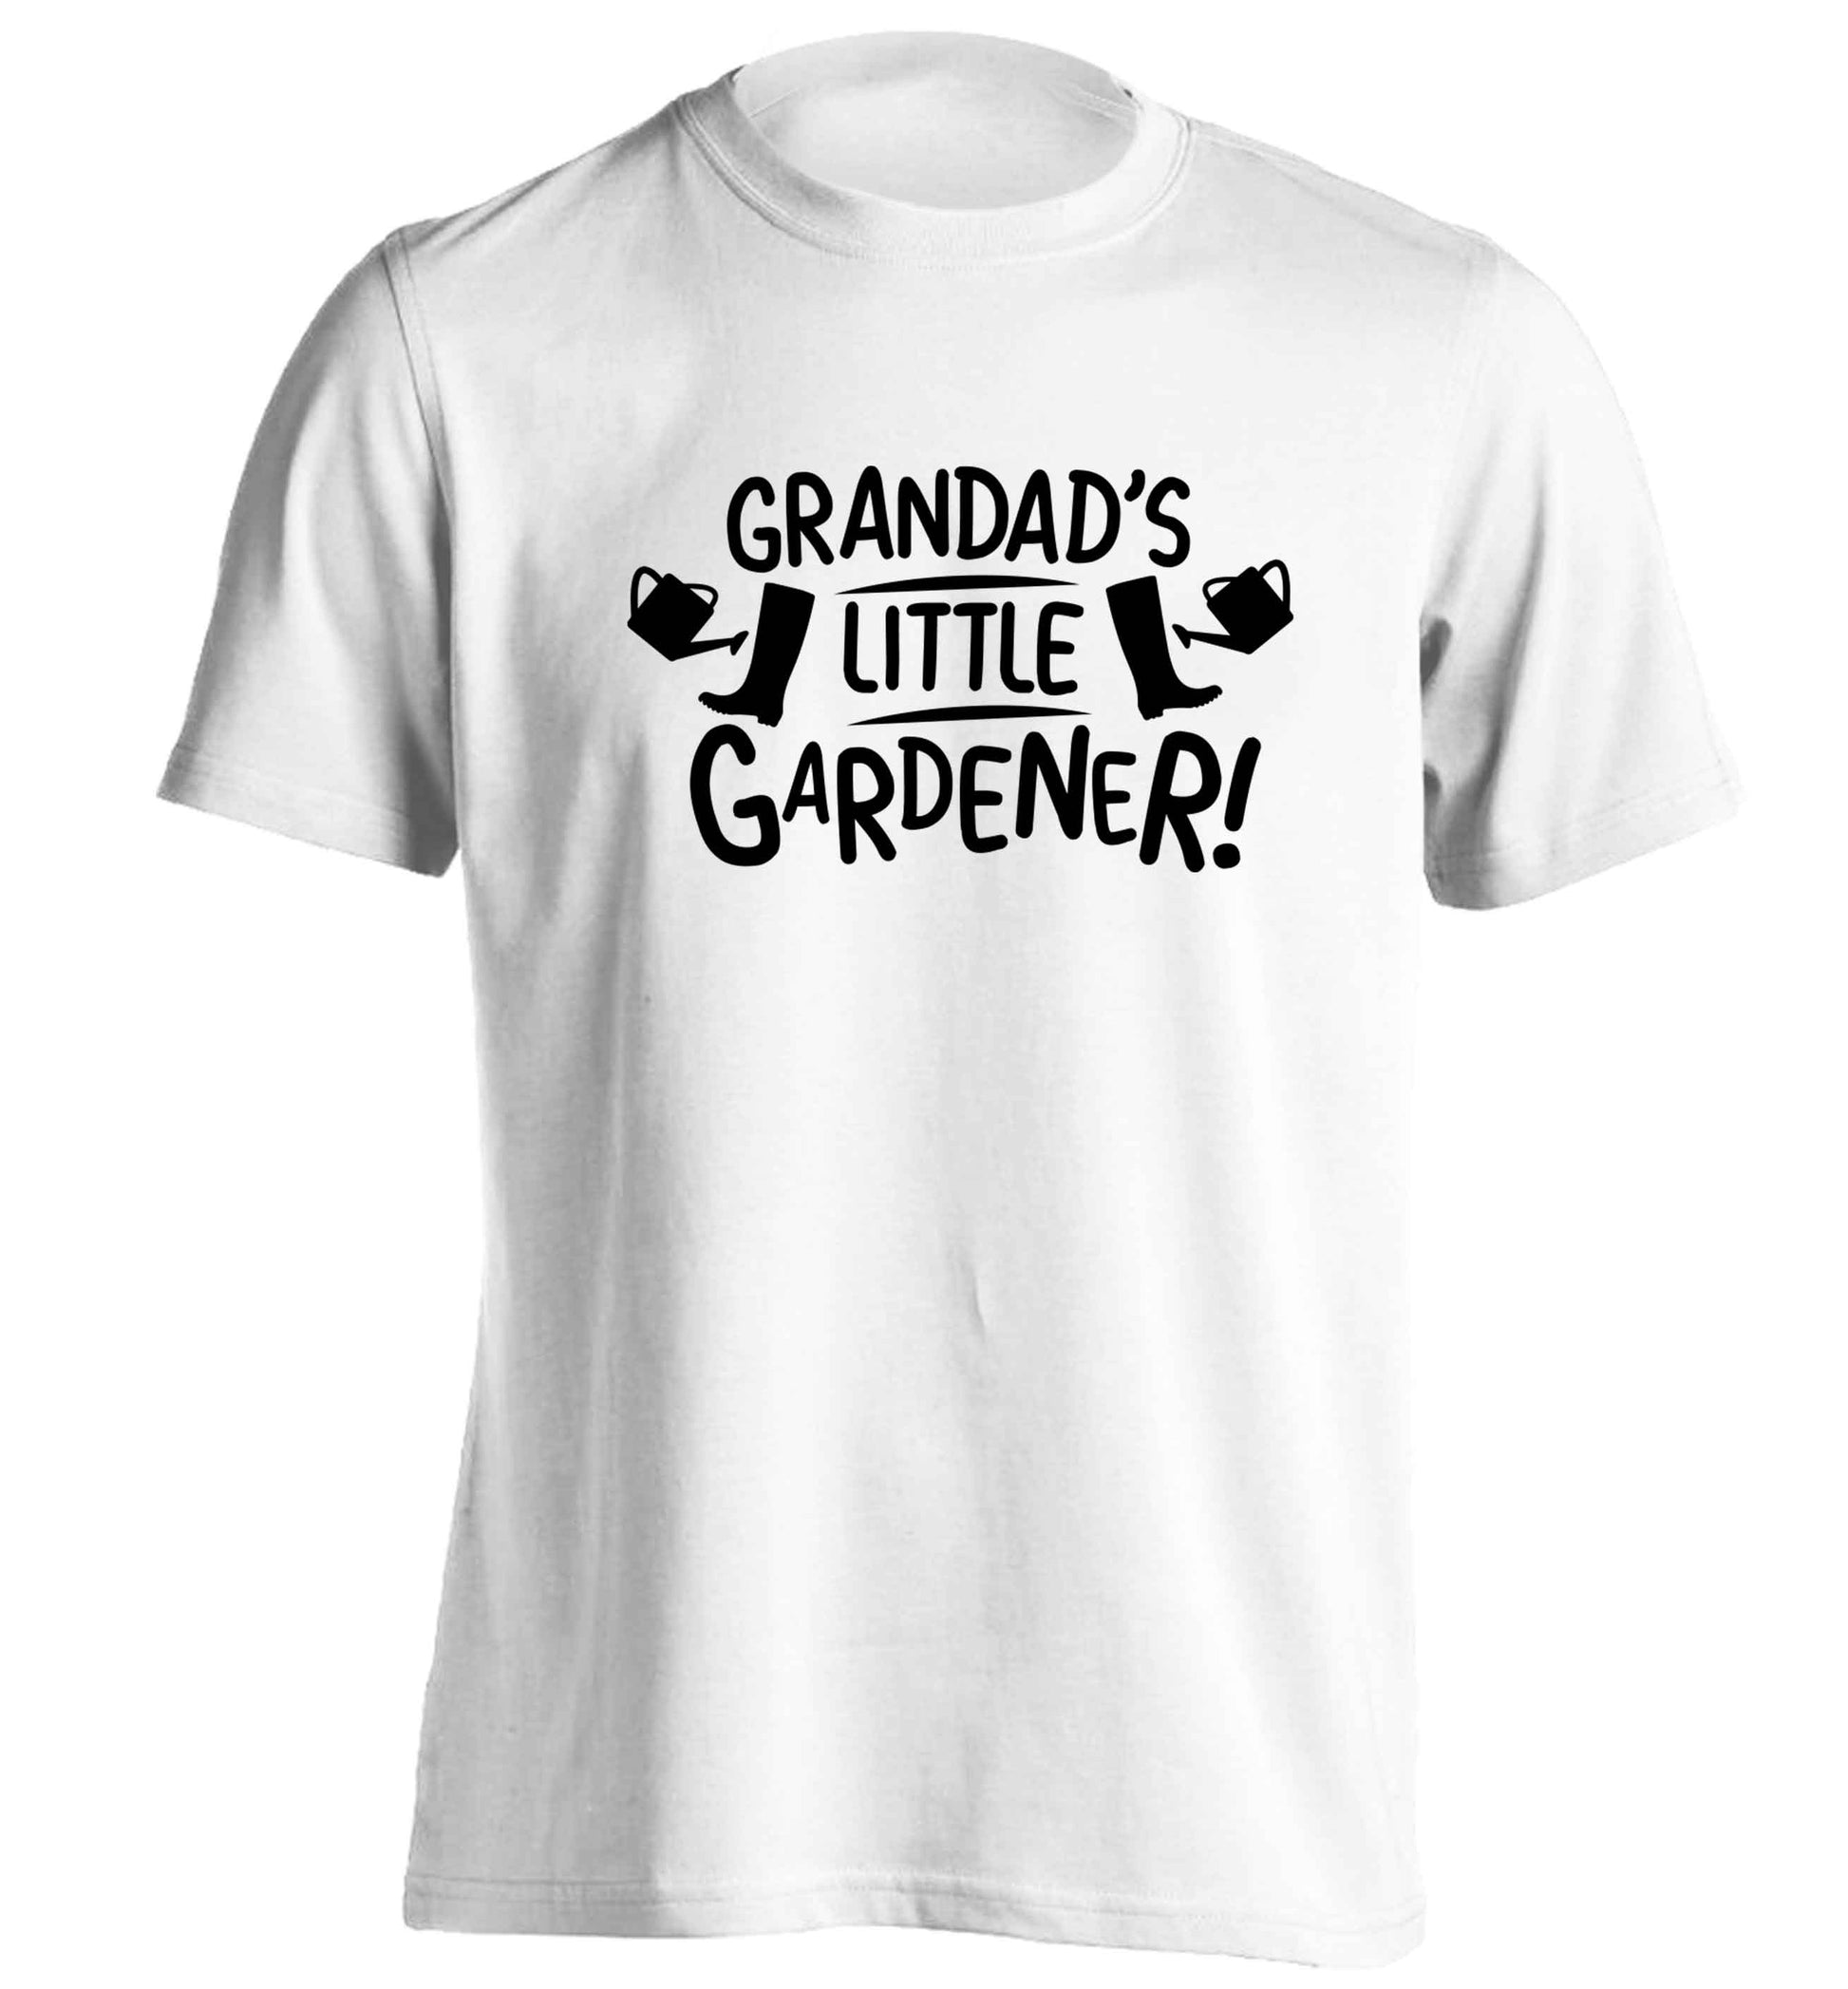 Grandad's little gardener adults unisex white Tshirt 2XL